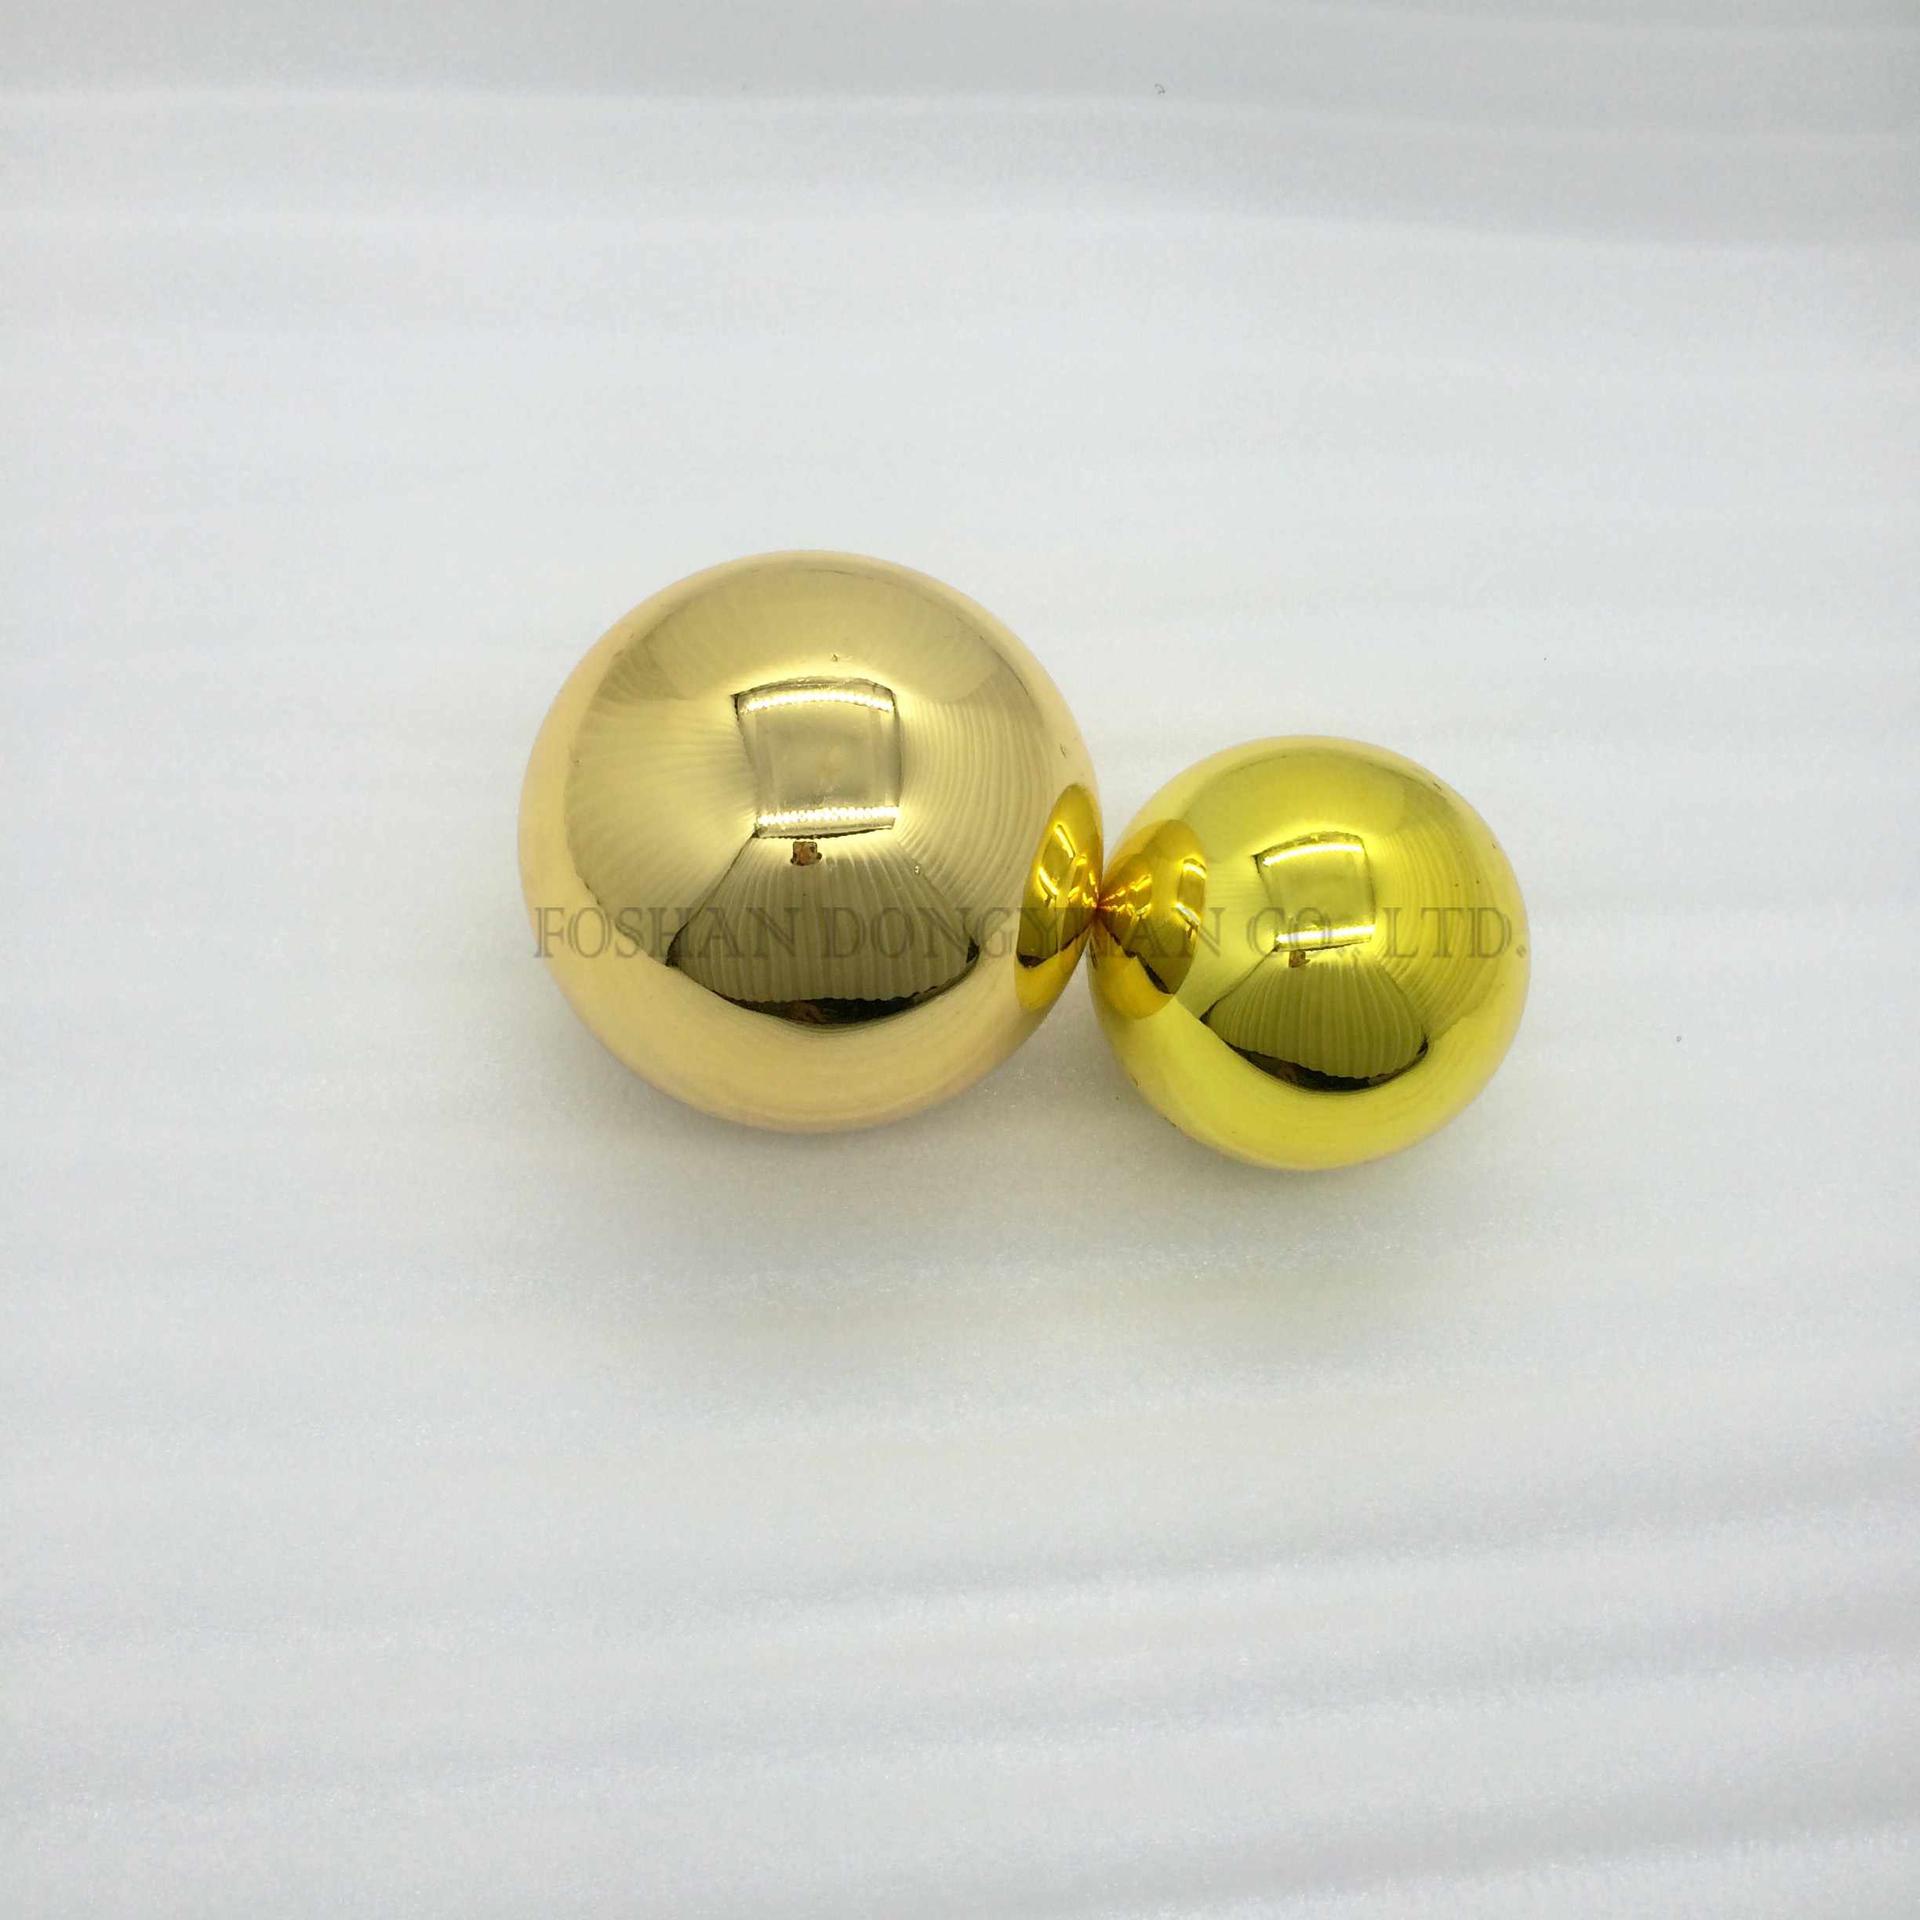 42mm, 25mm Golden Color Balls